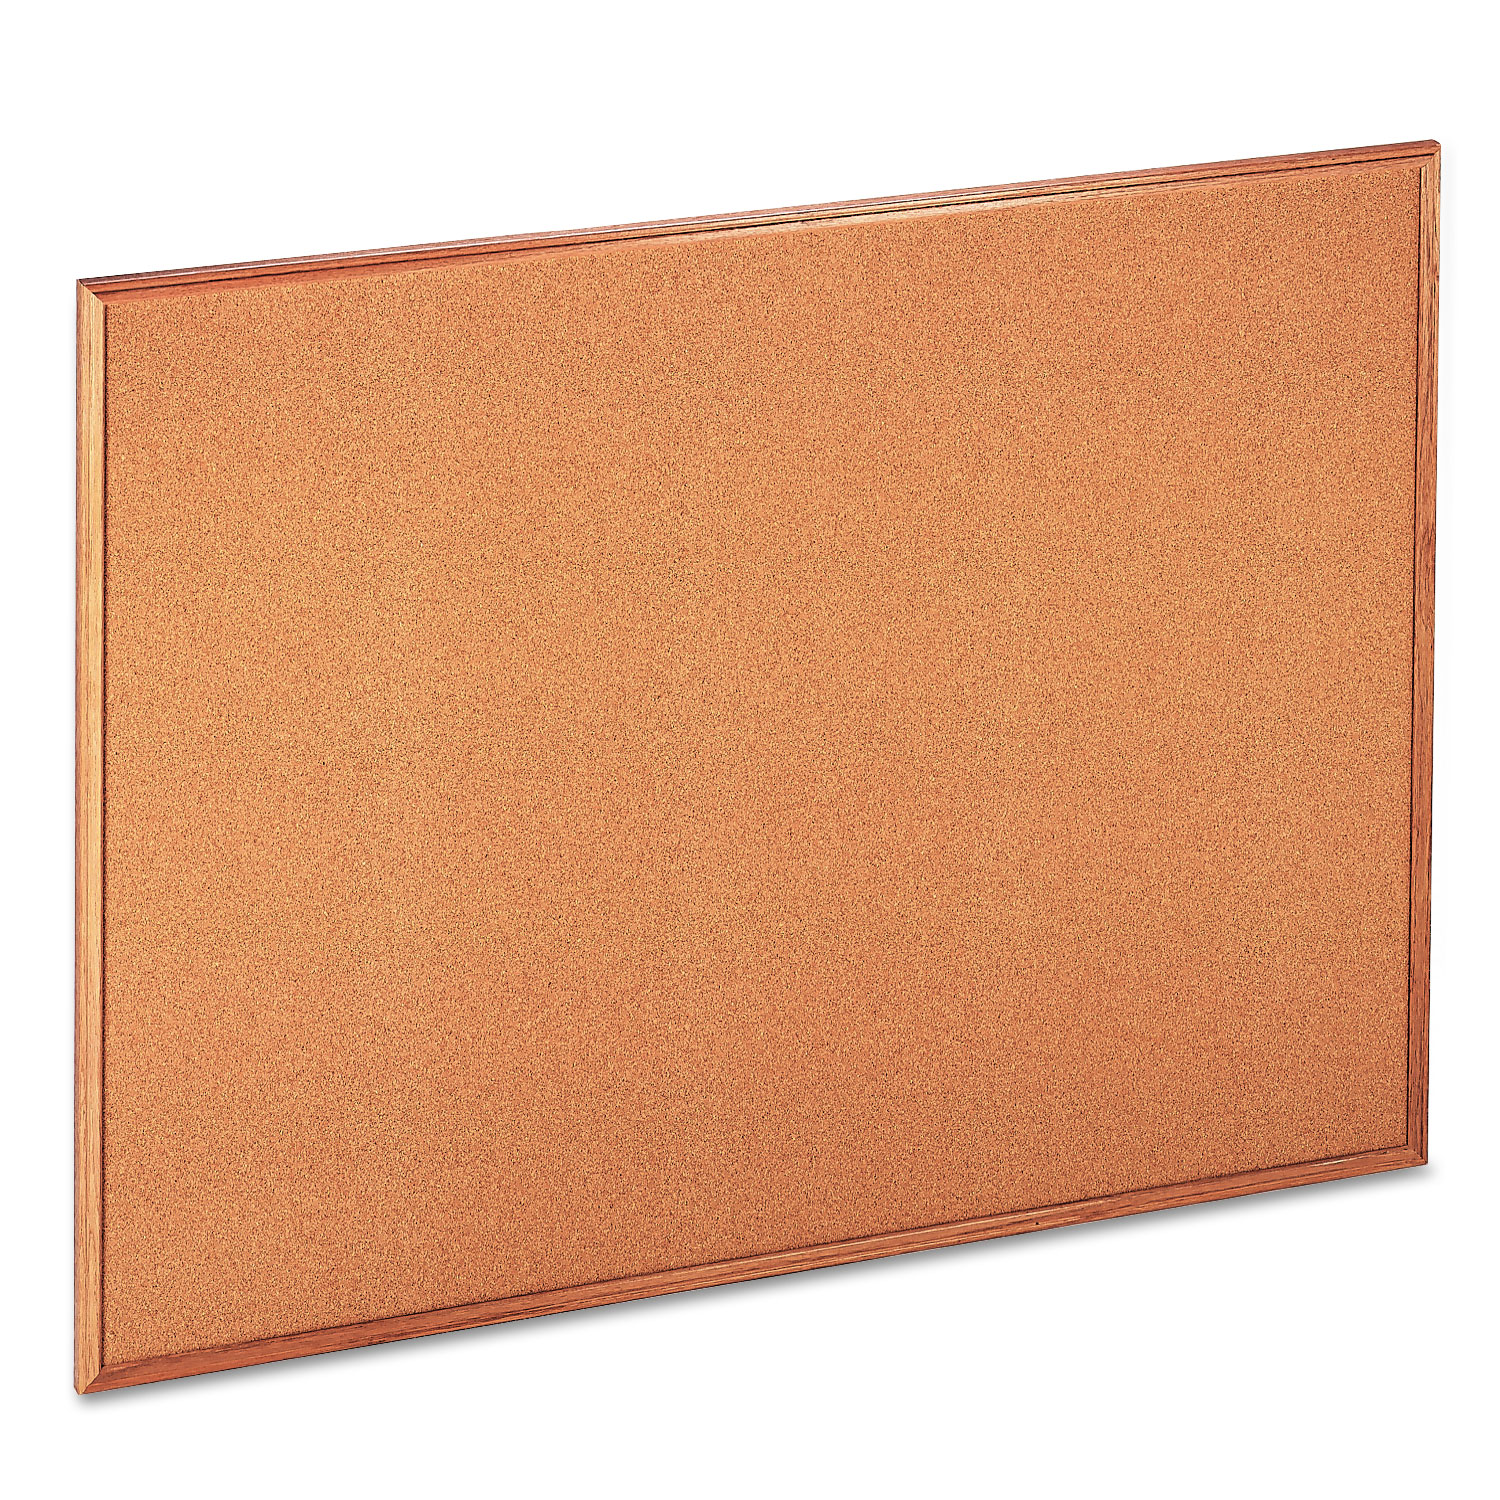  Universal 43604-UNV Cork Board with Oak Style Frame, 48 x 36, Natural, Oak-Finished Frame (UNV43604) 